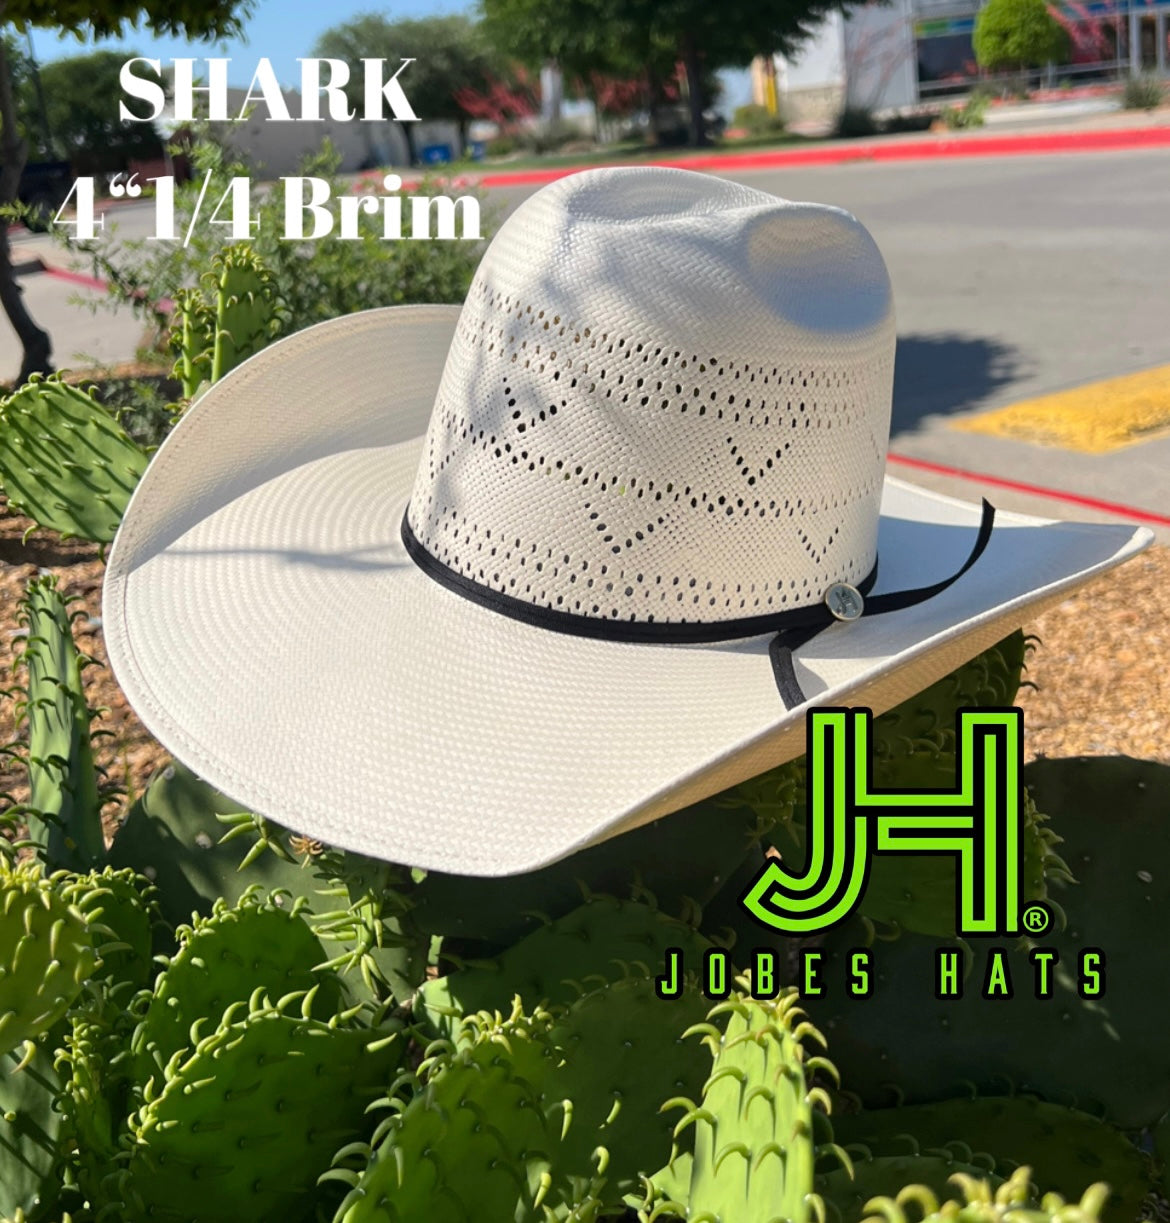 2020 Jobes Hats Straw “4th Of July” 4”1/4 brim